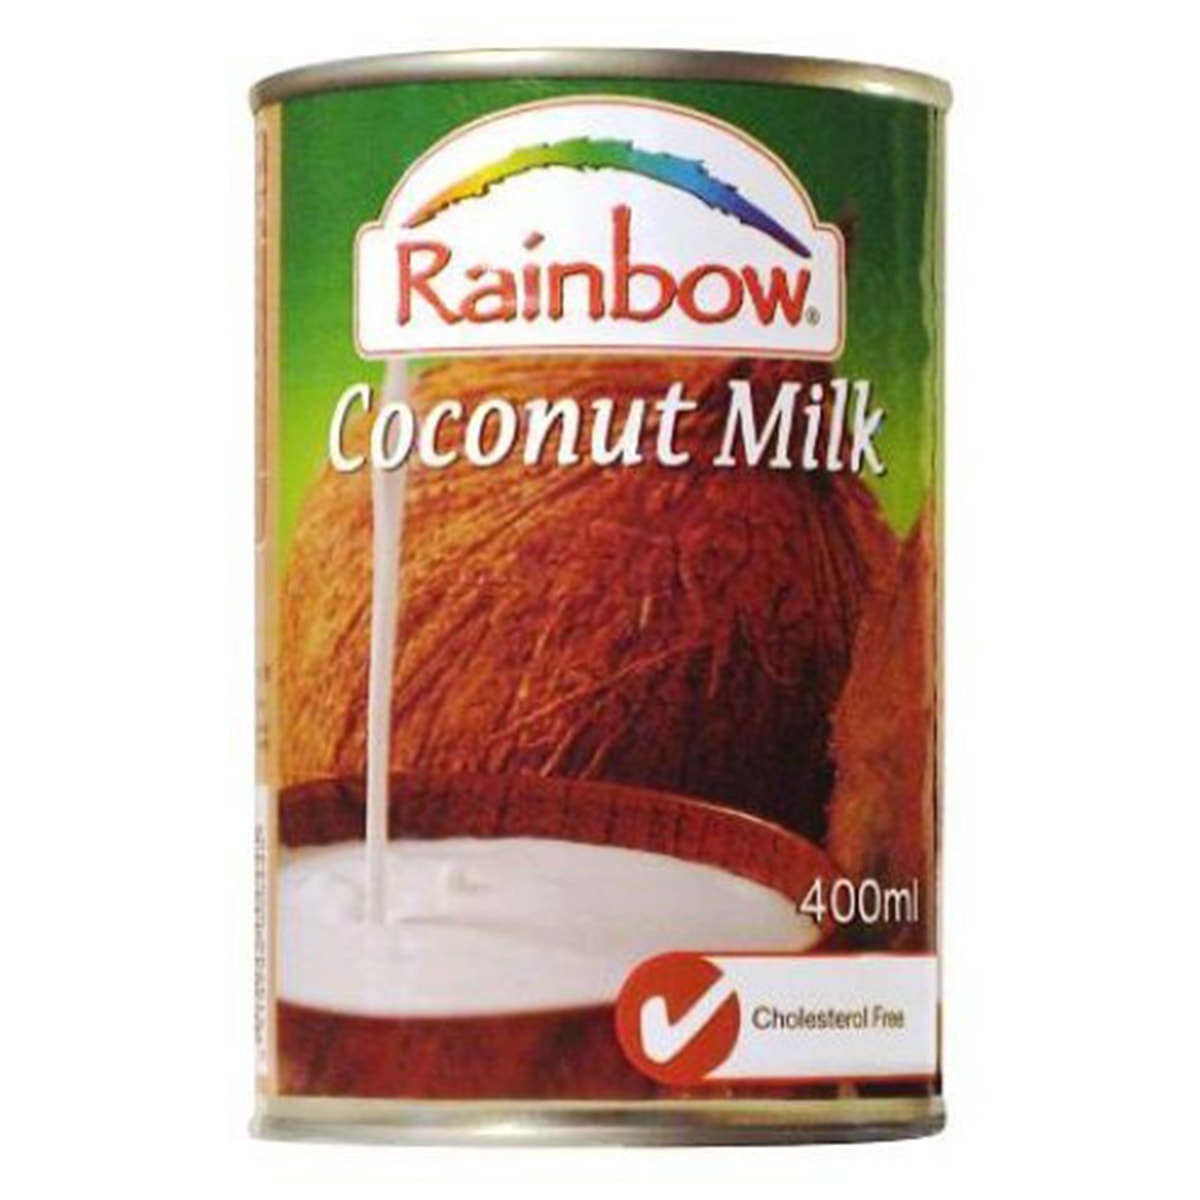 Buy Rainbow Coconut Milk - 400 ml